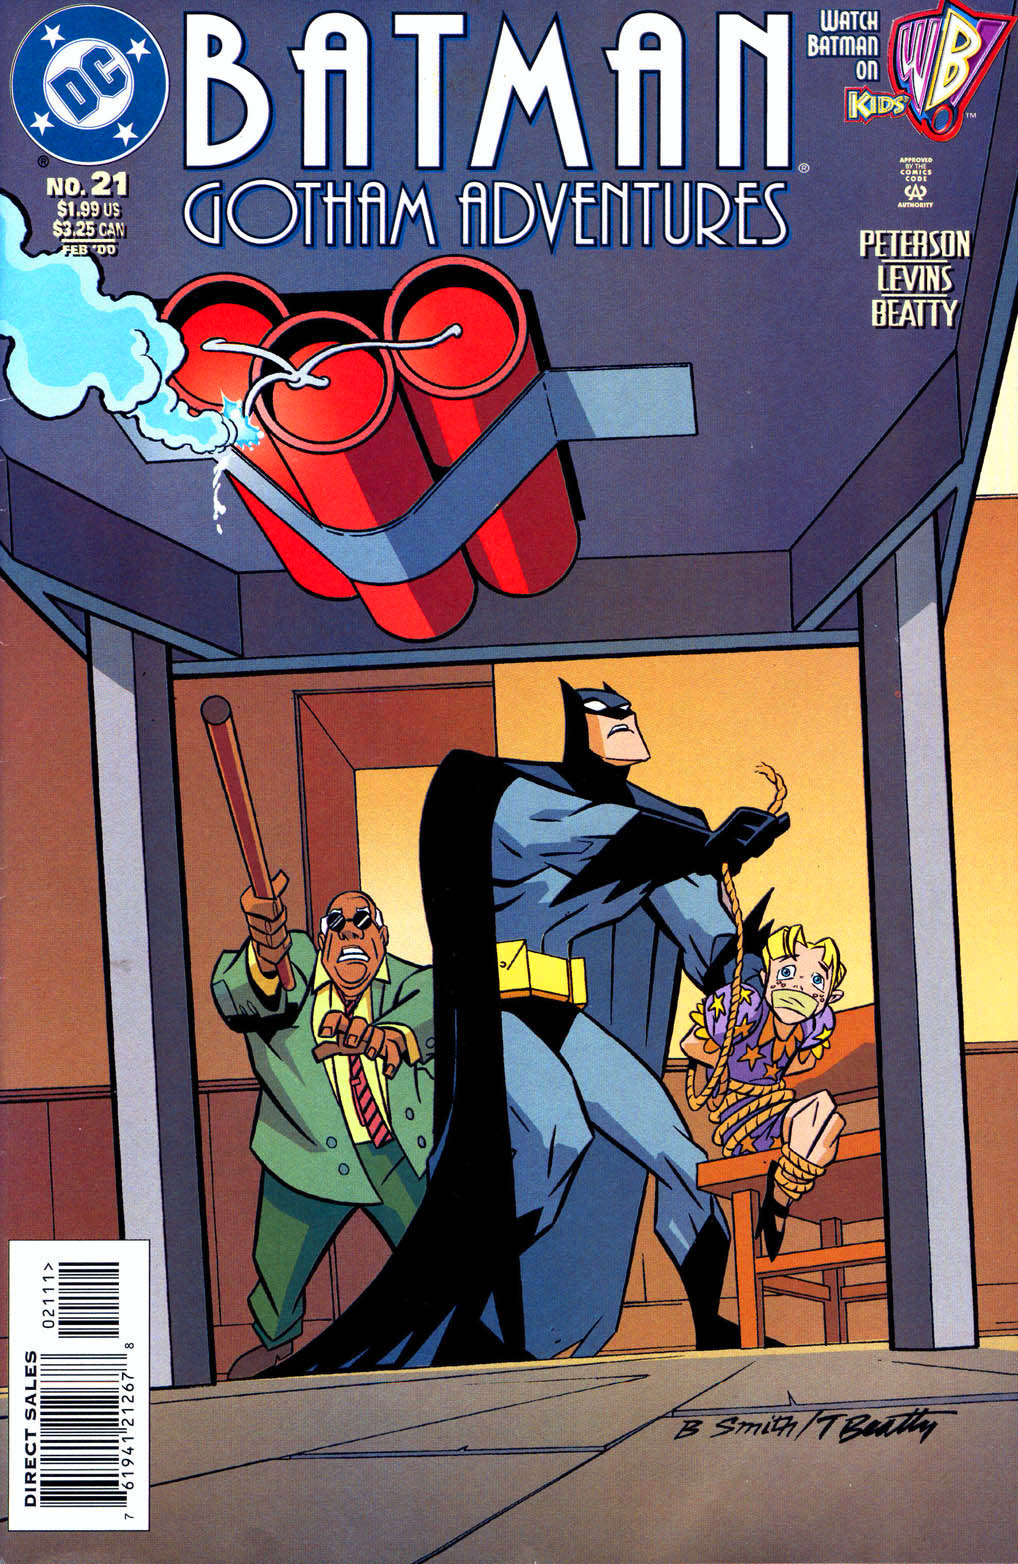 Batman Gotham Adventures Issue 21 | Read Batman Gotham Adventures Issue 21  comic online in high quality. Read Full Comic online for free - Read comics  online in high quality .|